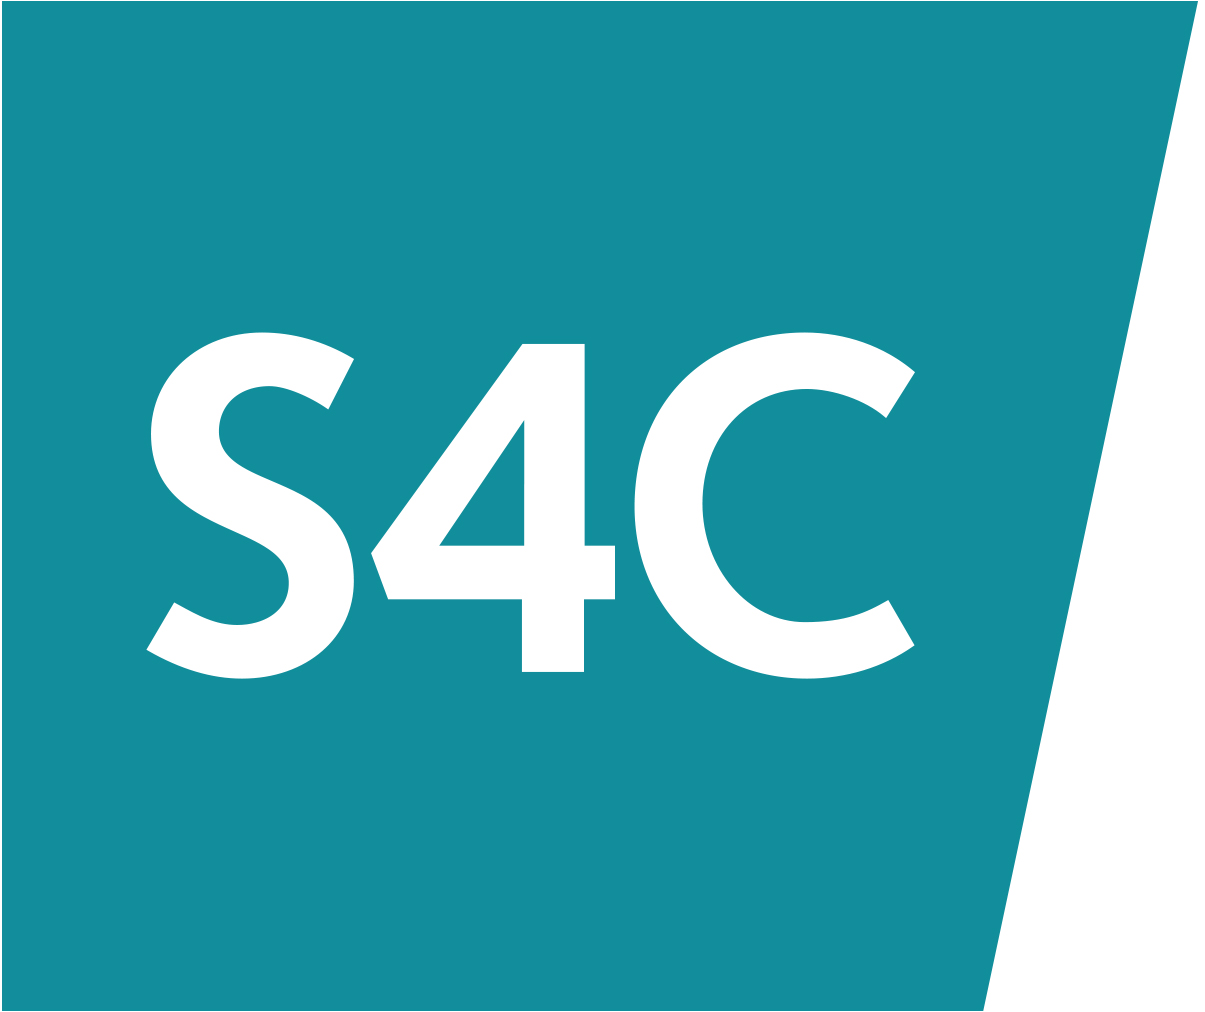 S4C is recruiting a ‘Cymraeg’ Strategy Leader